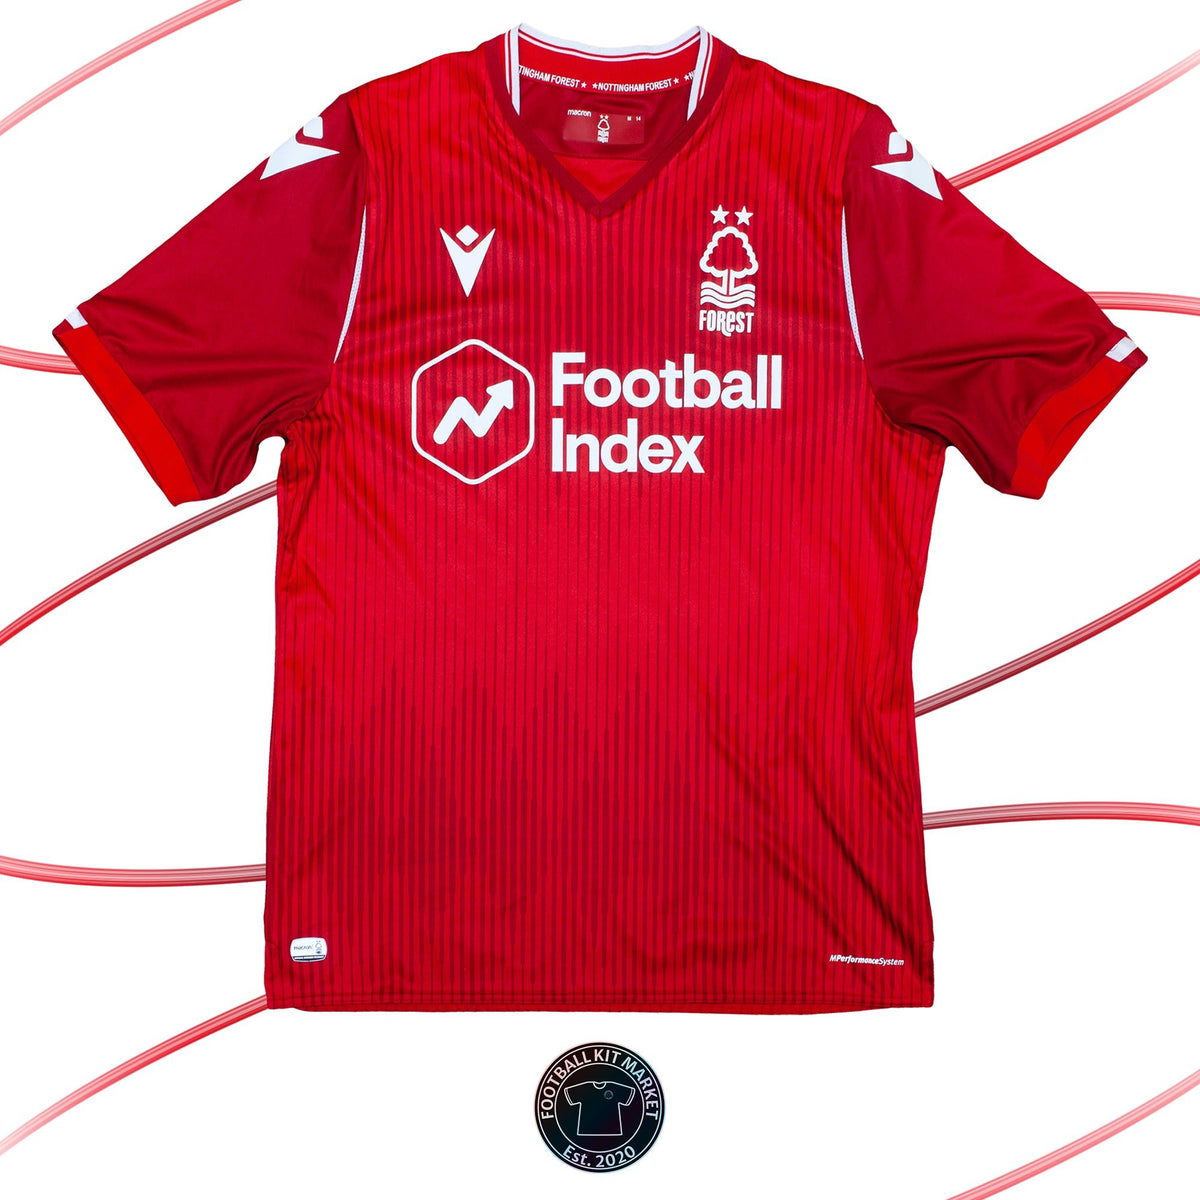 Genuine NOTTINGHAM FOREST Home Shirt (2019-2020) - MACRON (M) - Product Image from Football Kit Market